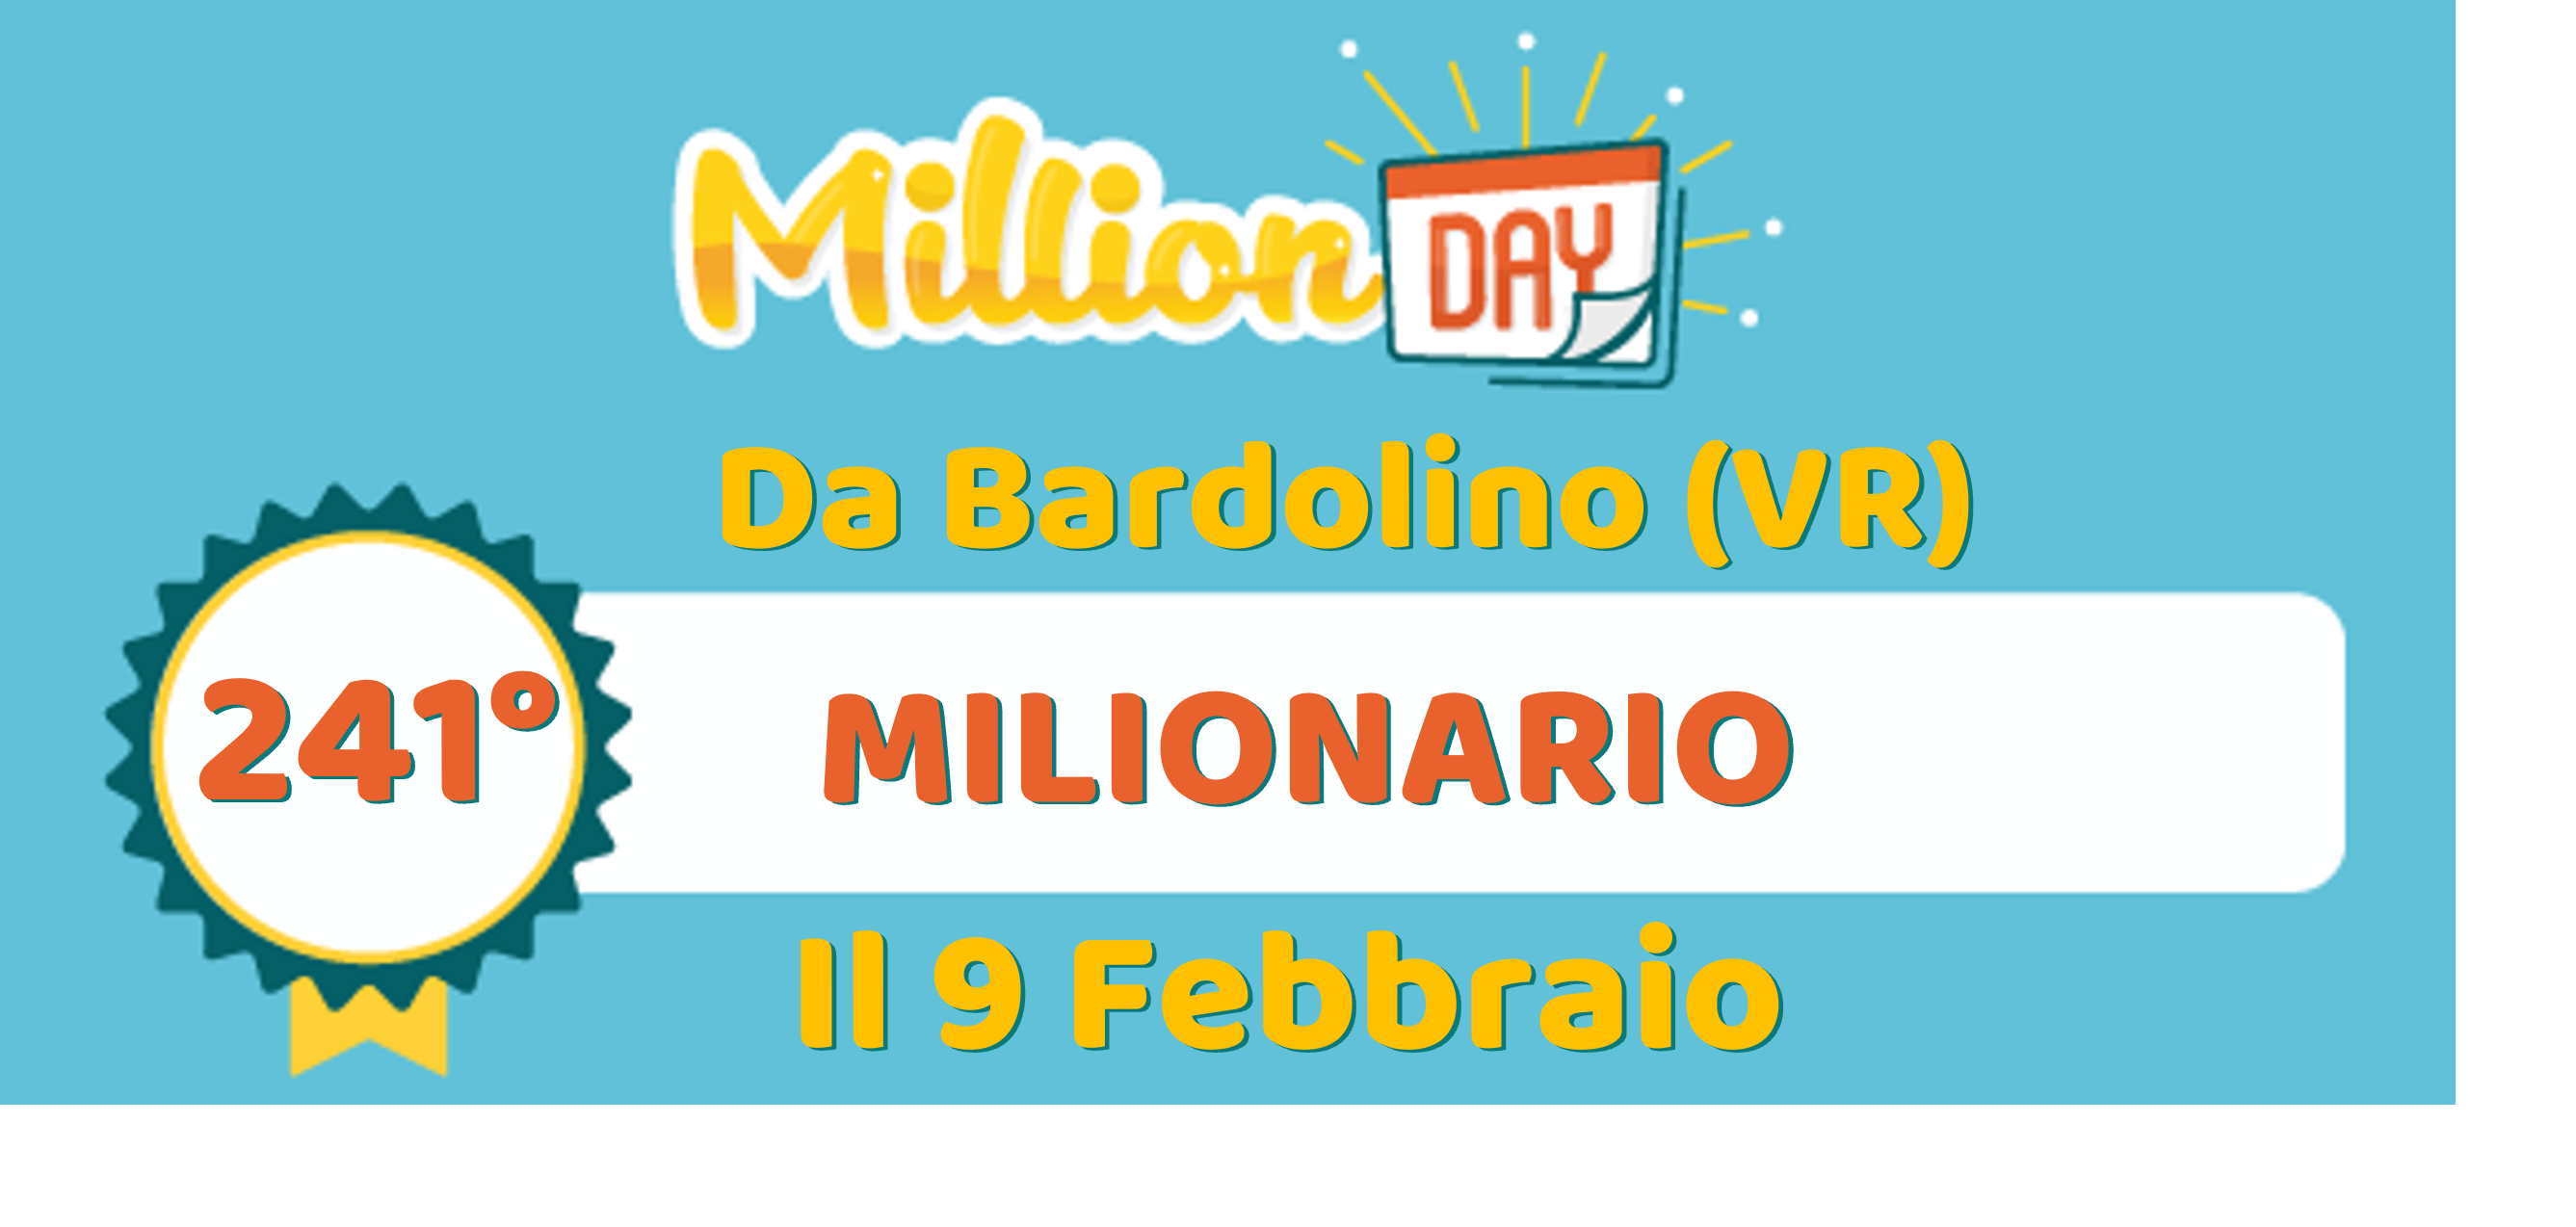 vincita MillionDAY da Bardolino